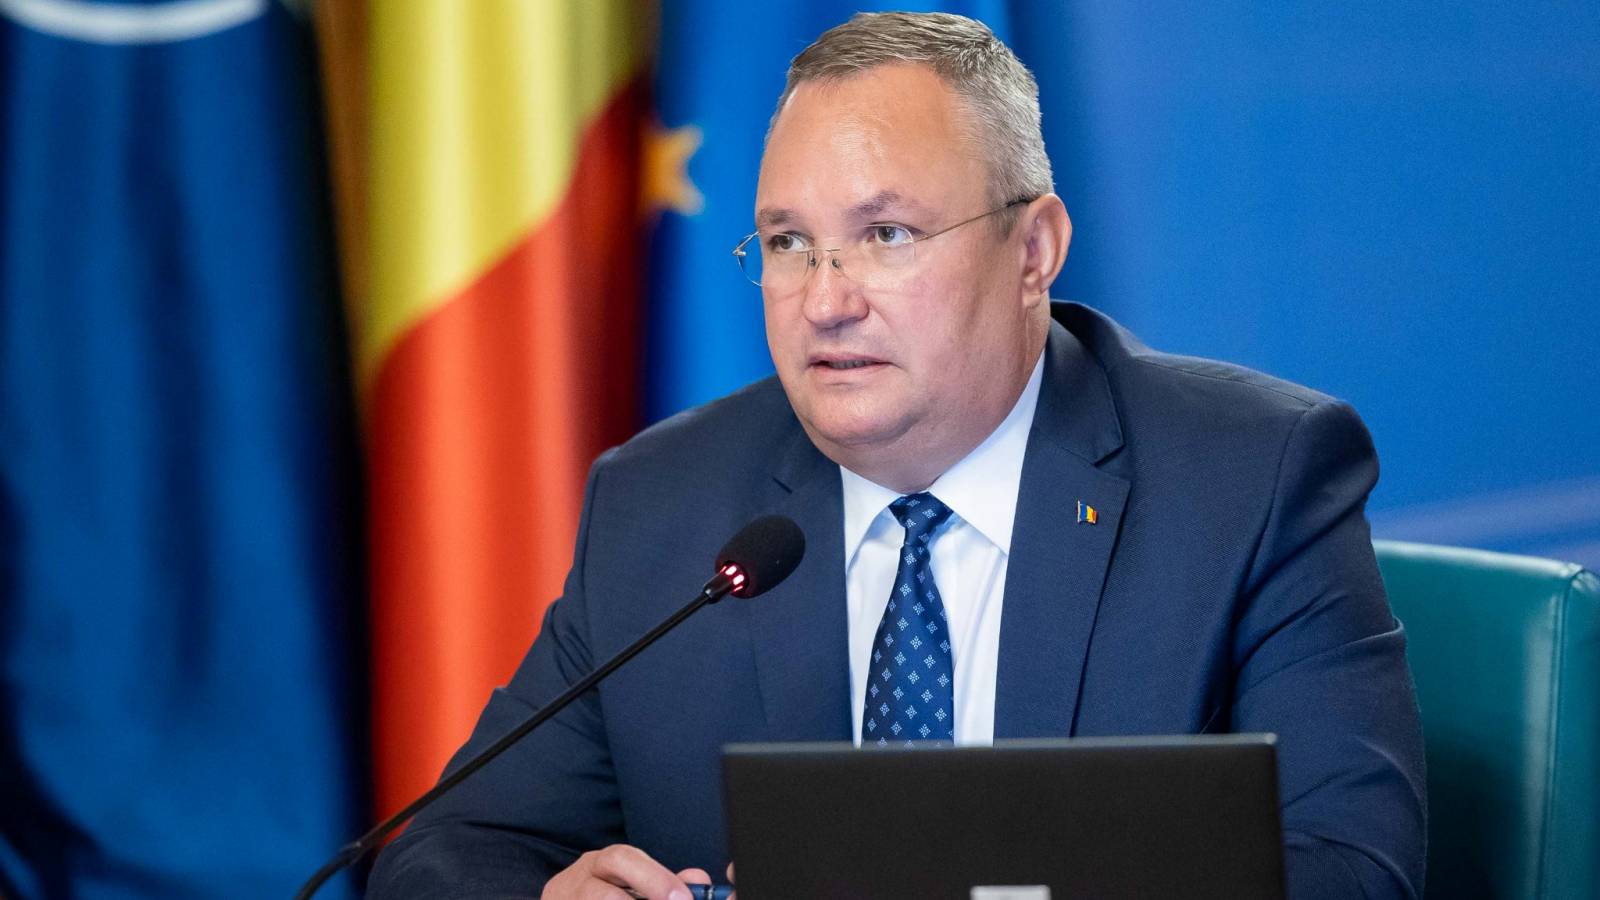 Nicolae Ciuca Announces New Government Measures for Romania